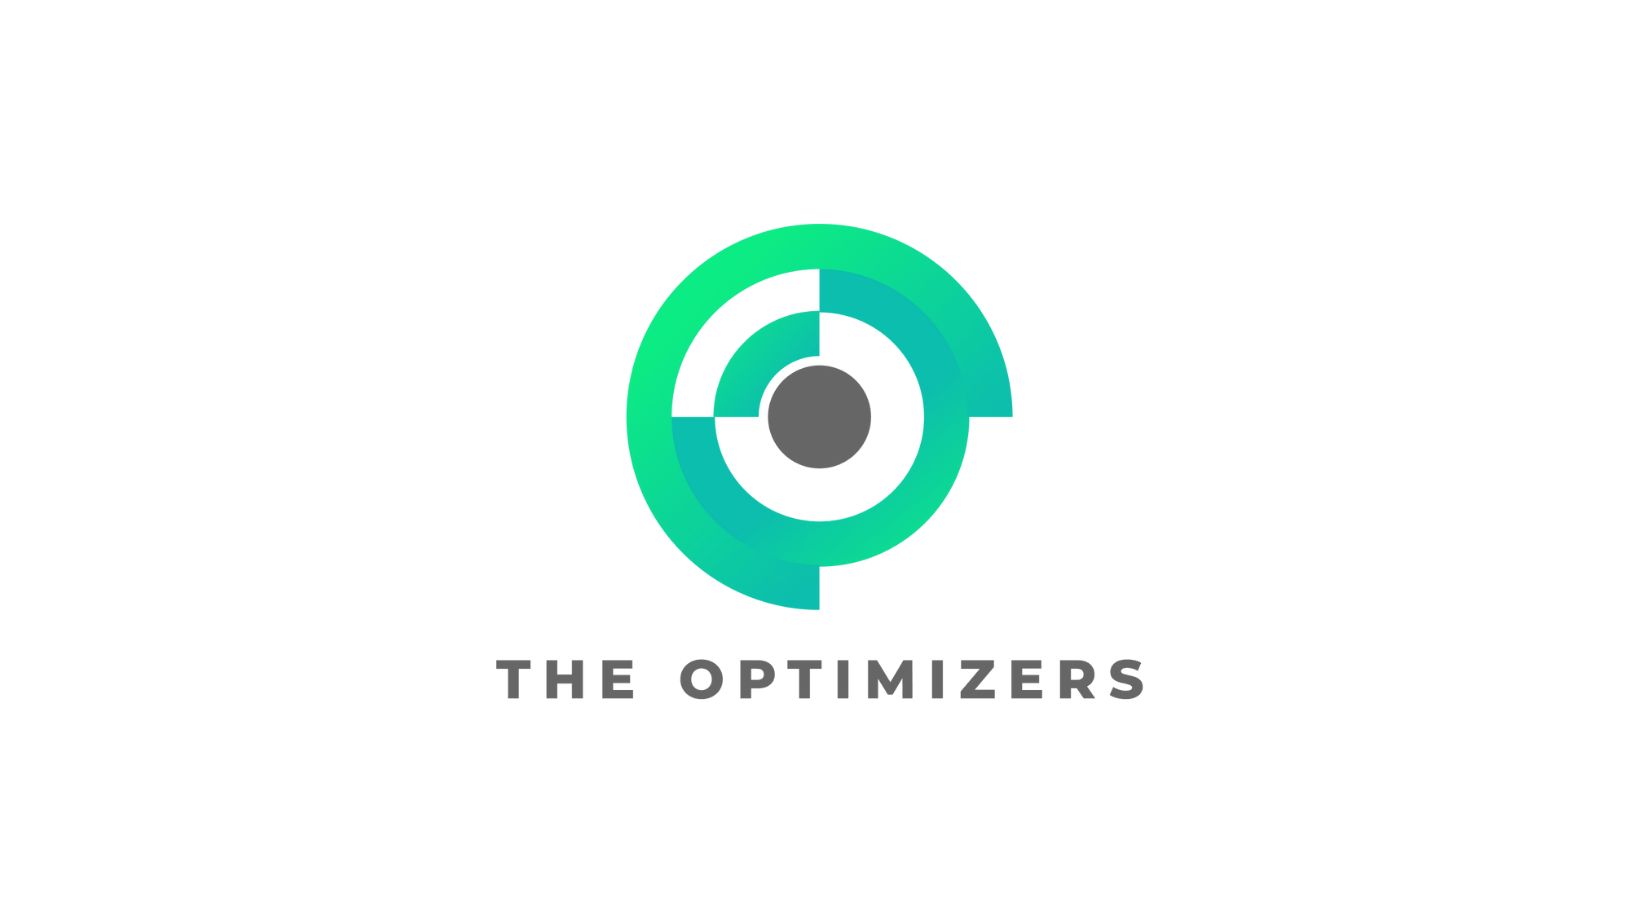 The OptimiZers logo